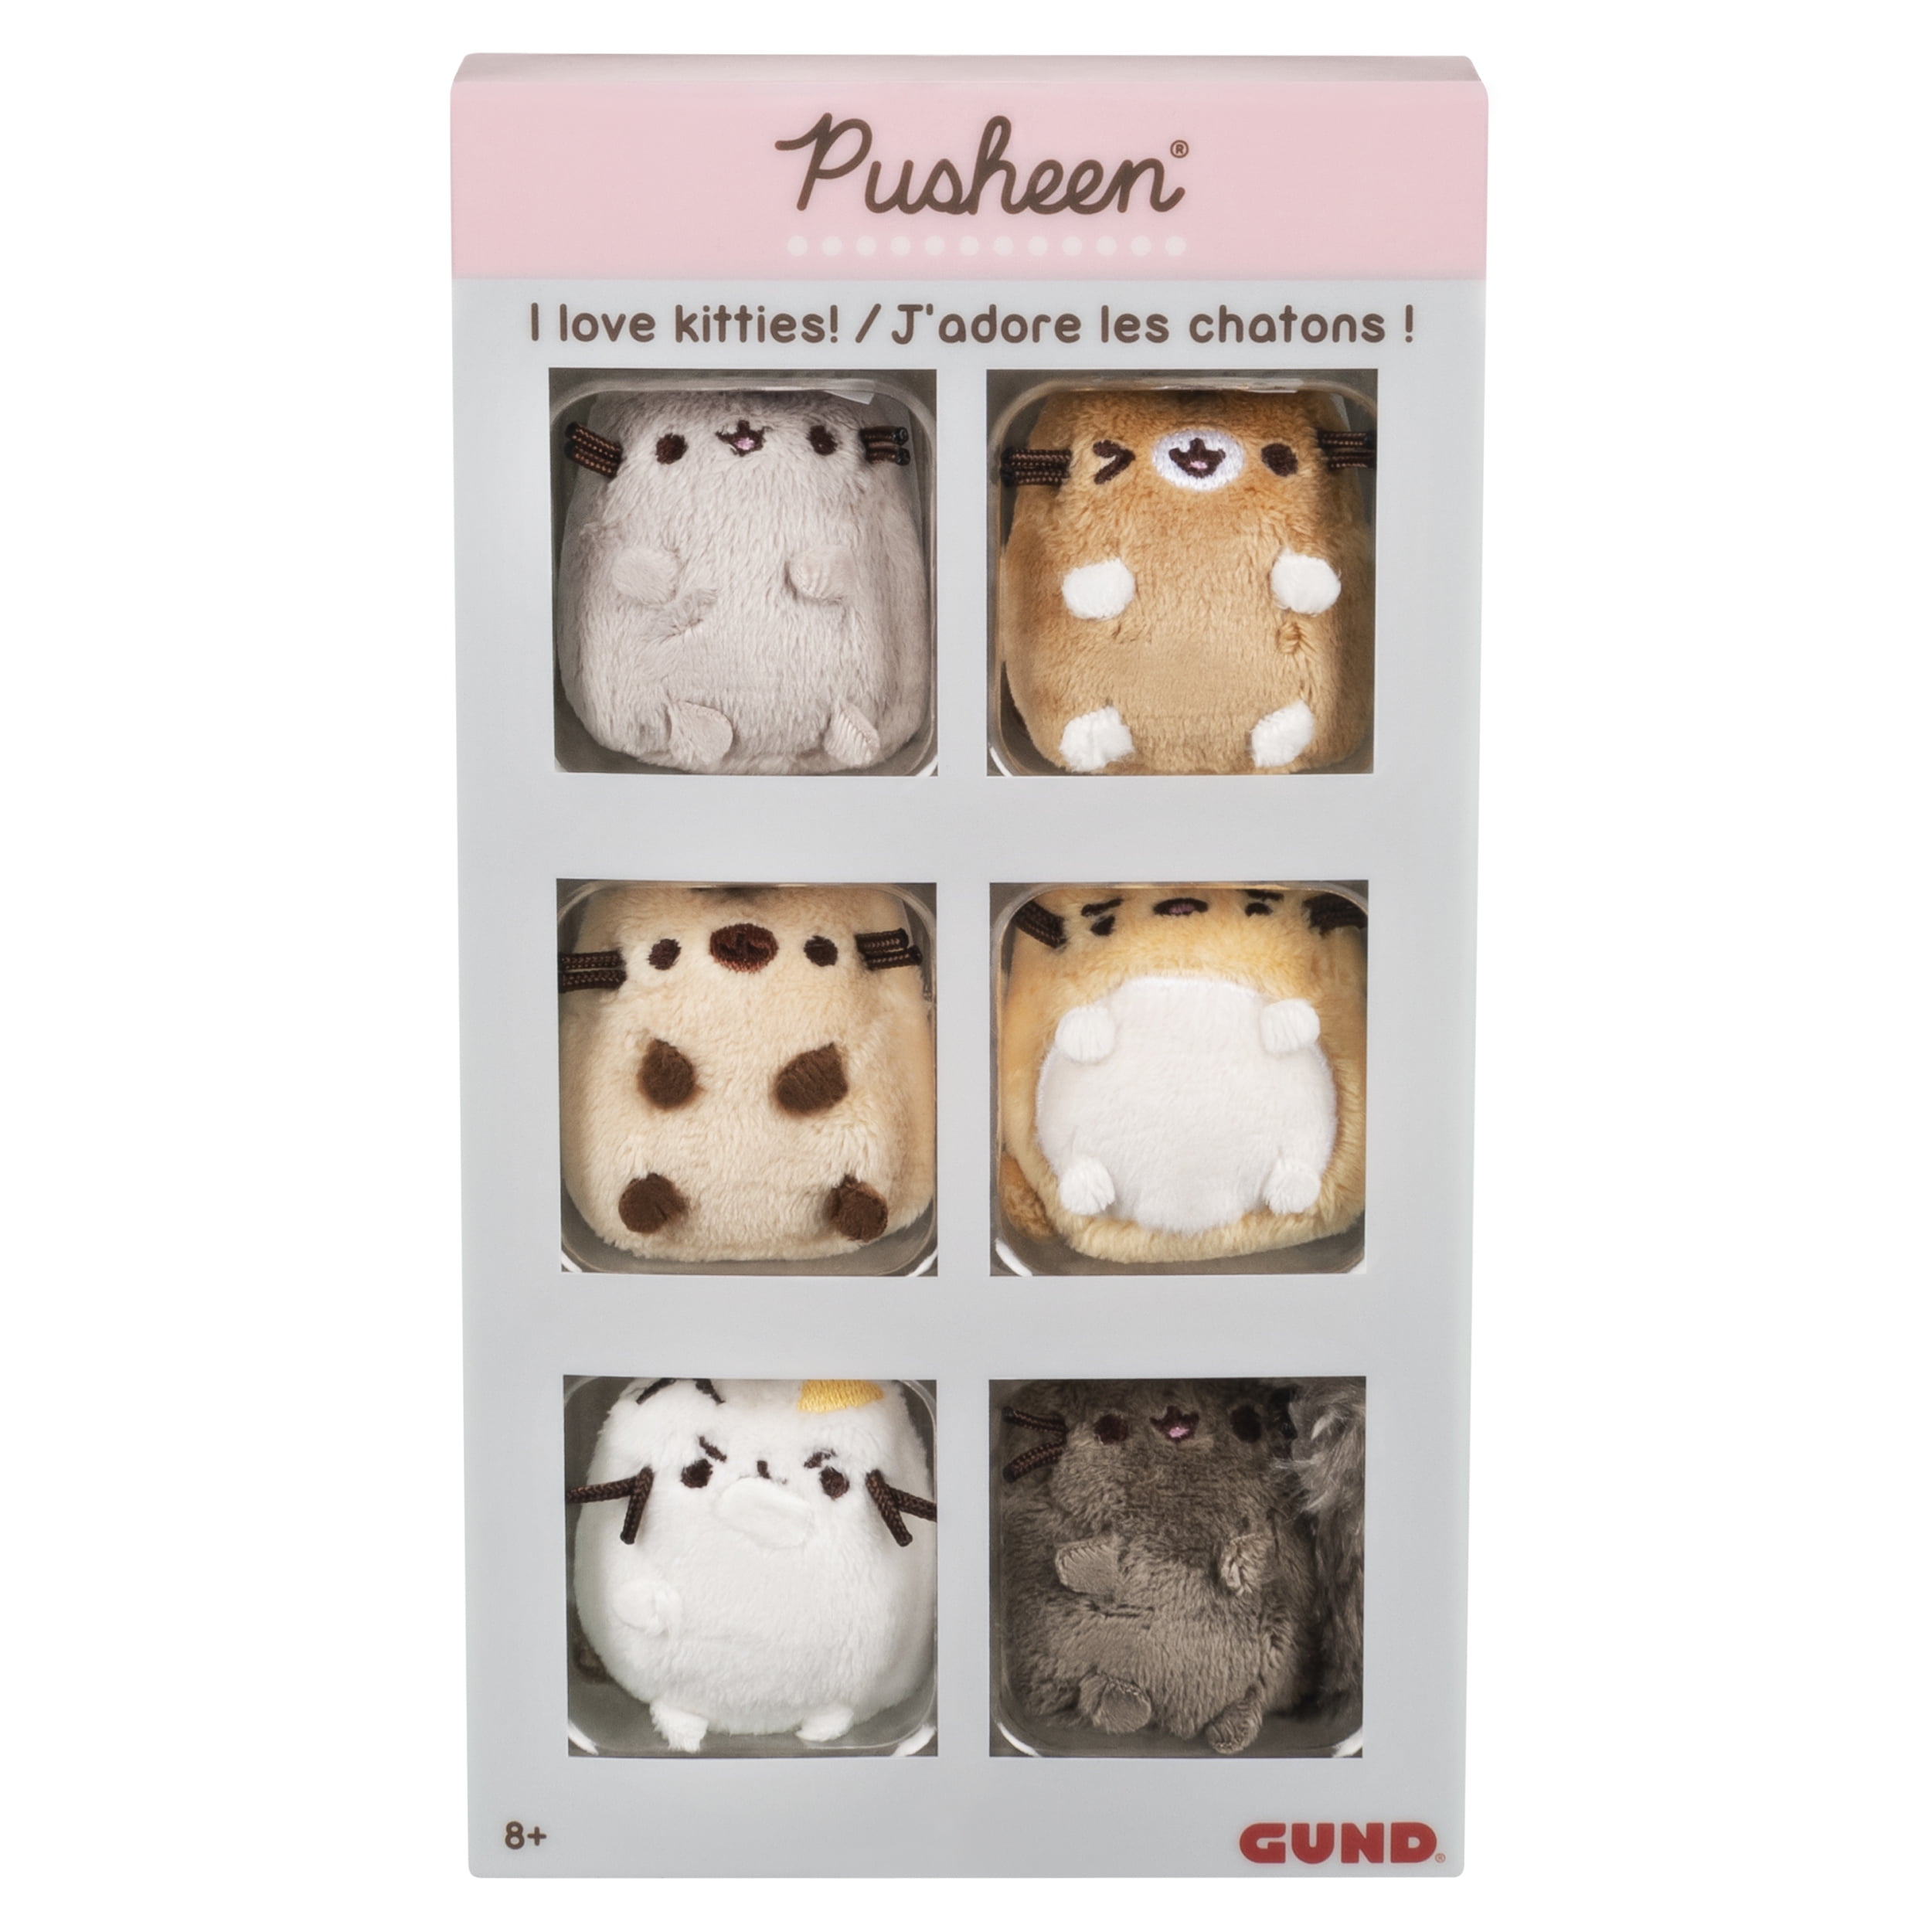 GUND Pusheen Comic Collector Set of 6 Plush Stuffed Animal Cats -  